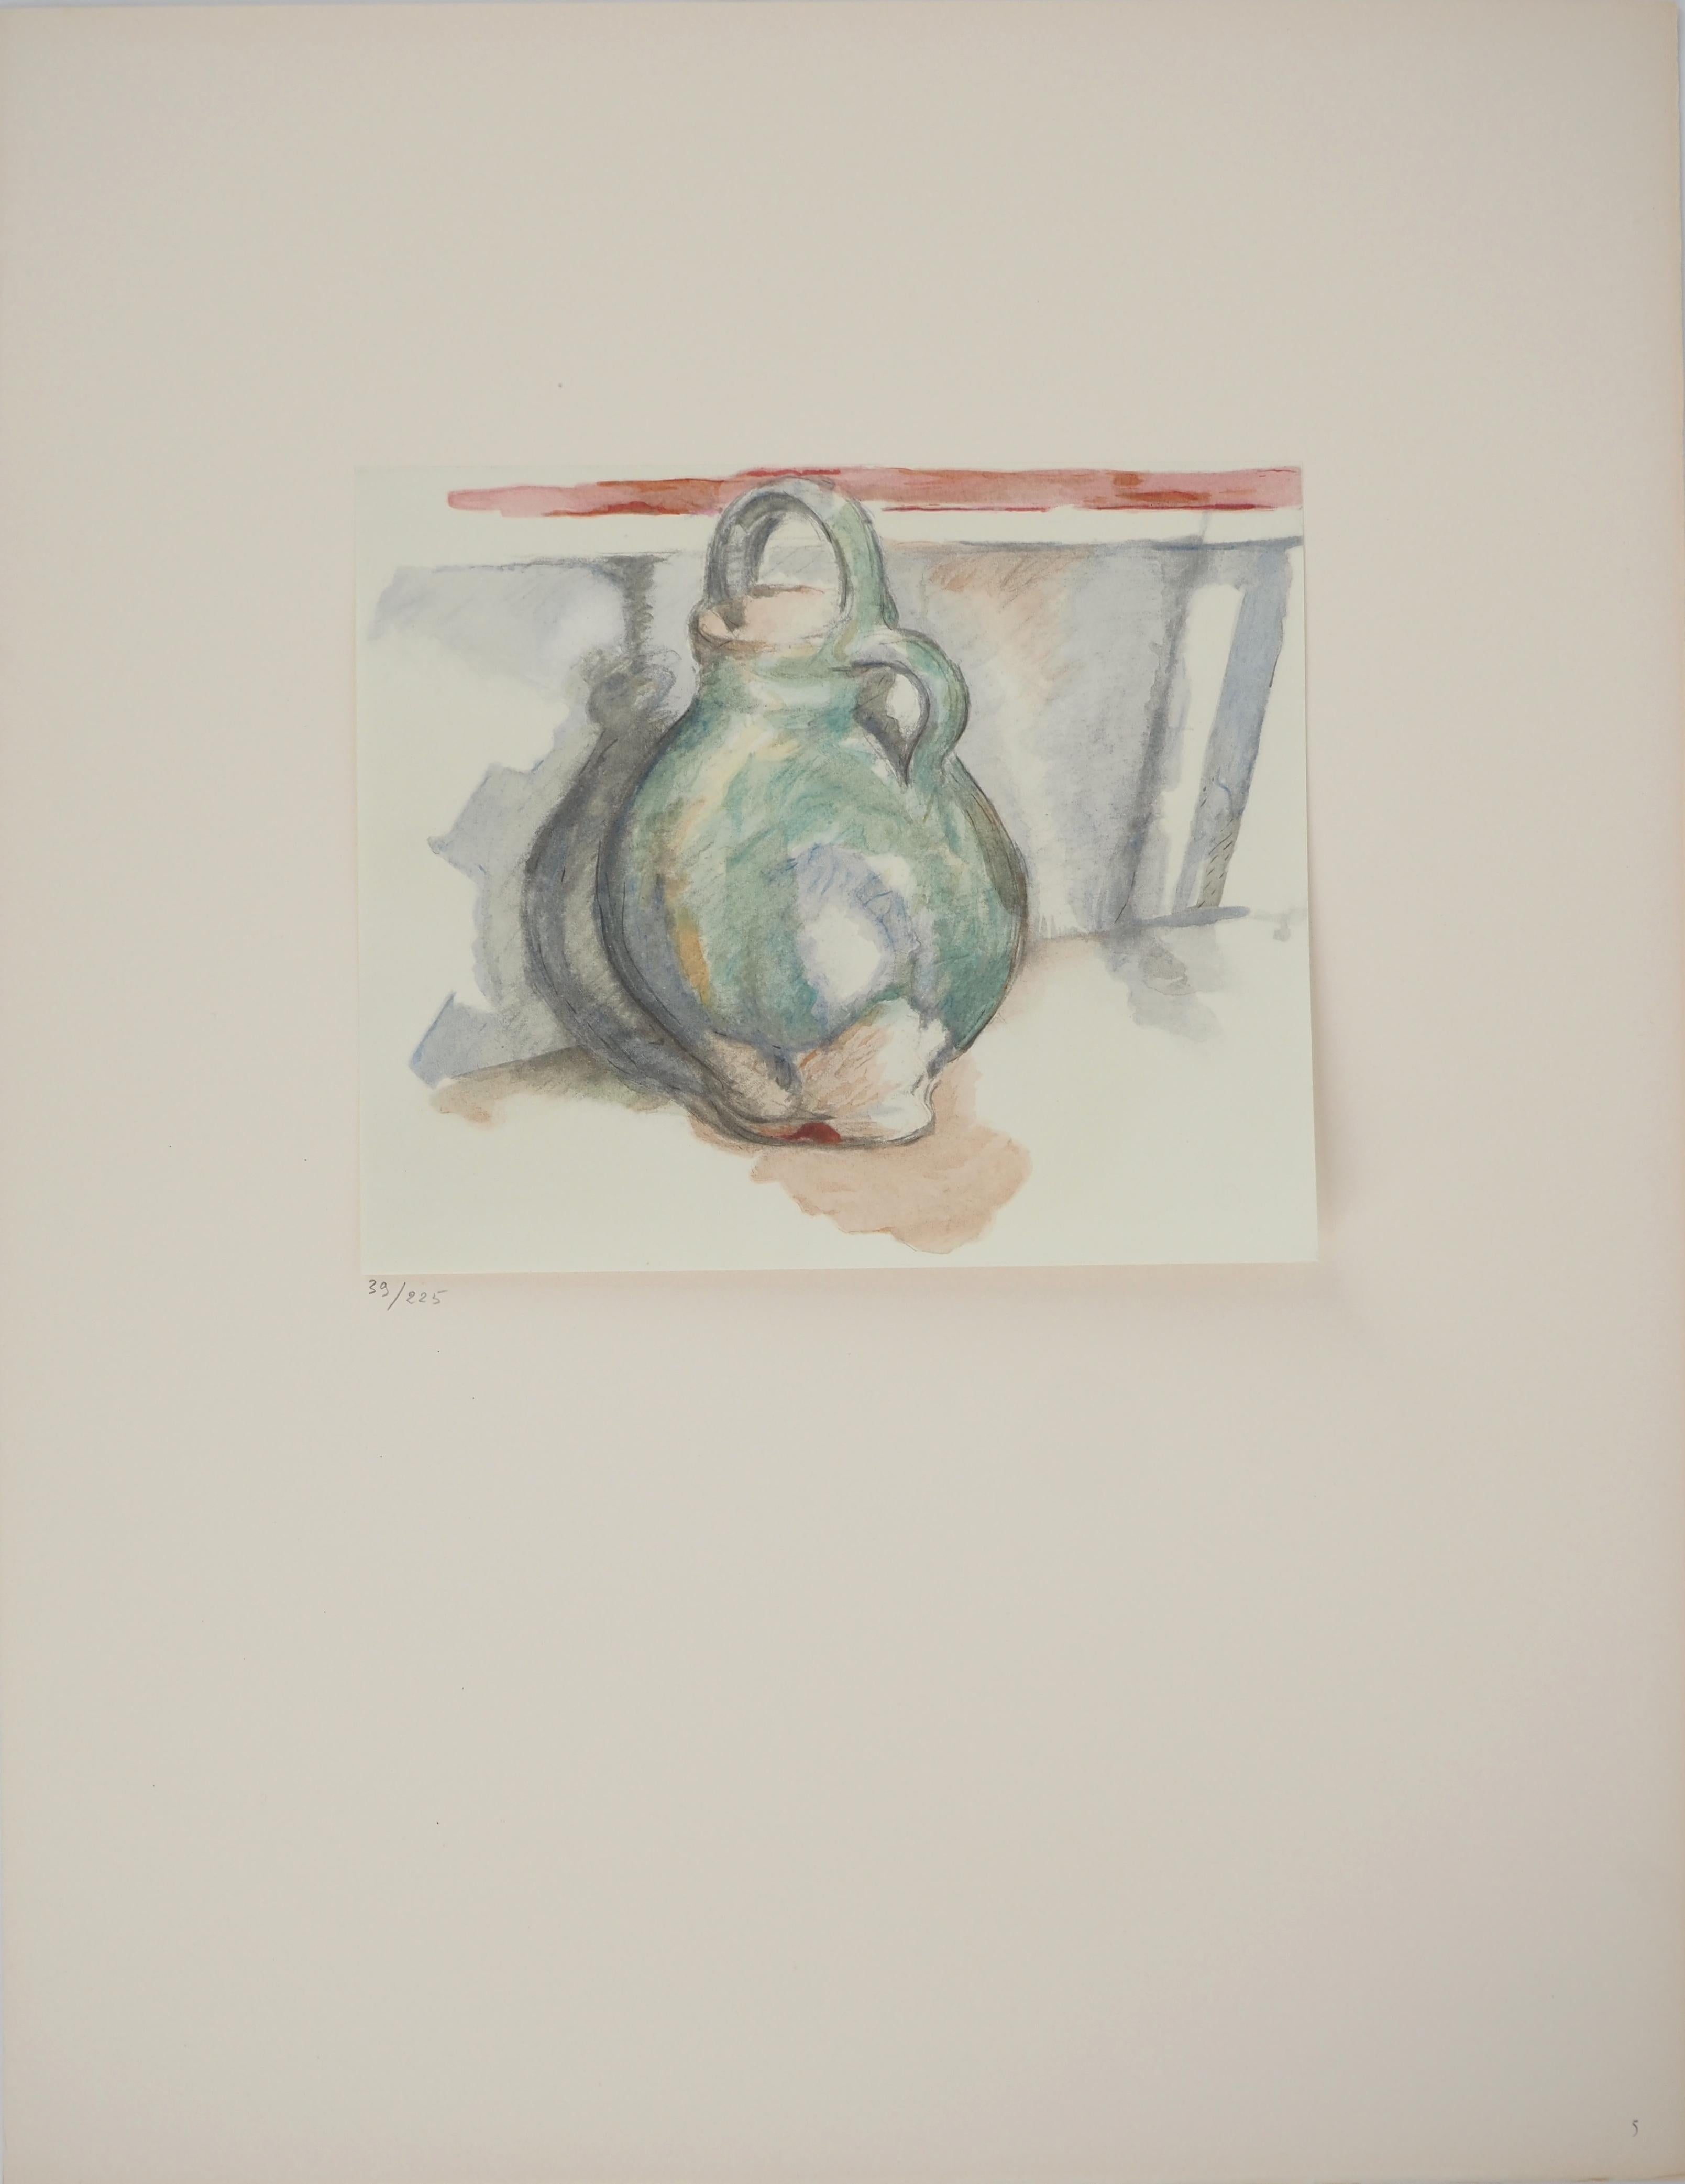 Der grüne Krug – Lithographie, 1971 – Print von Paul Cézanne